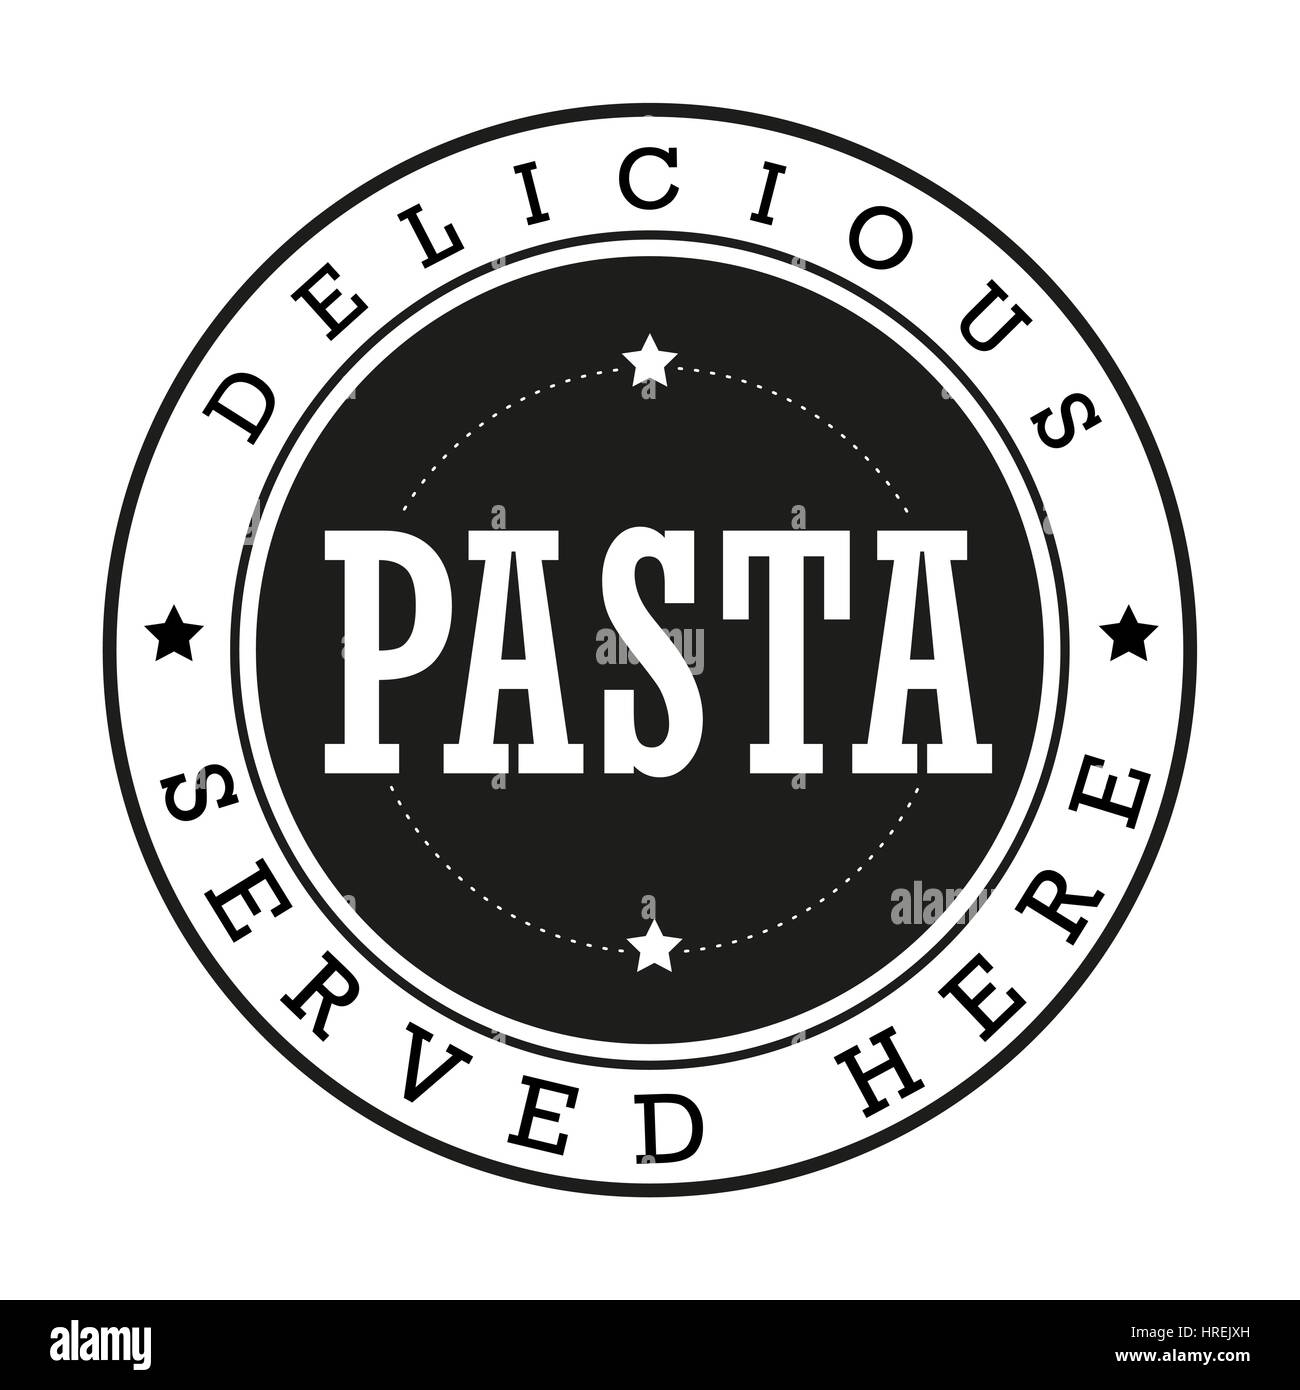 Pasta vintage stamp logo Stock Vector